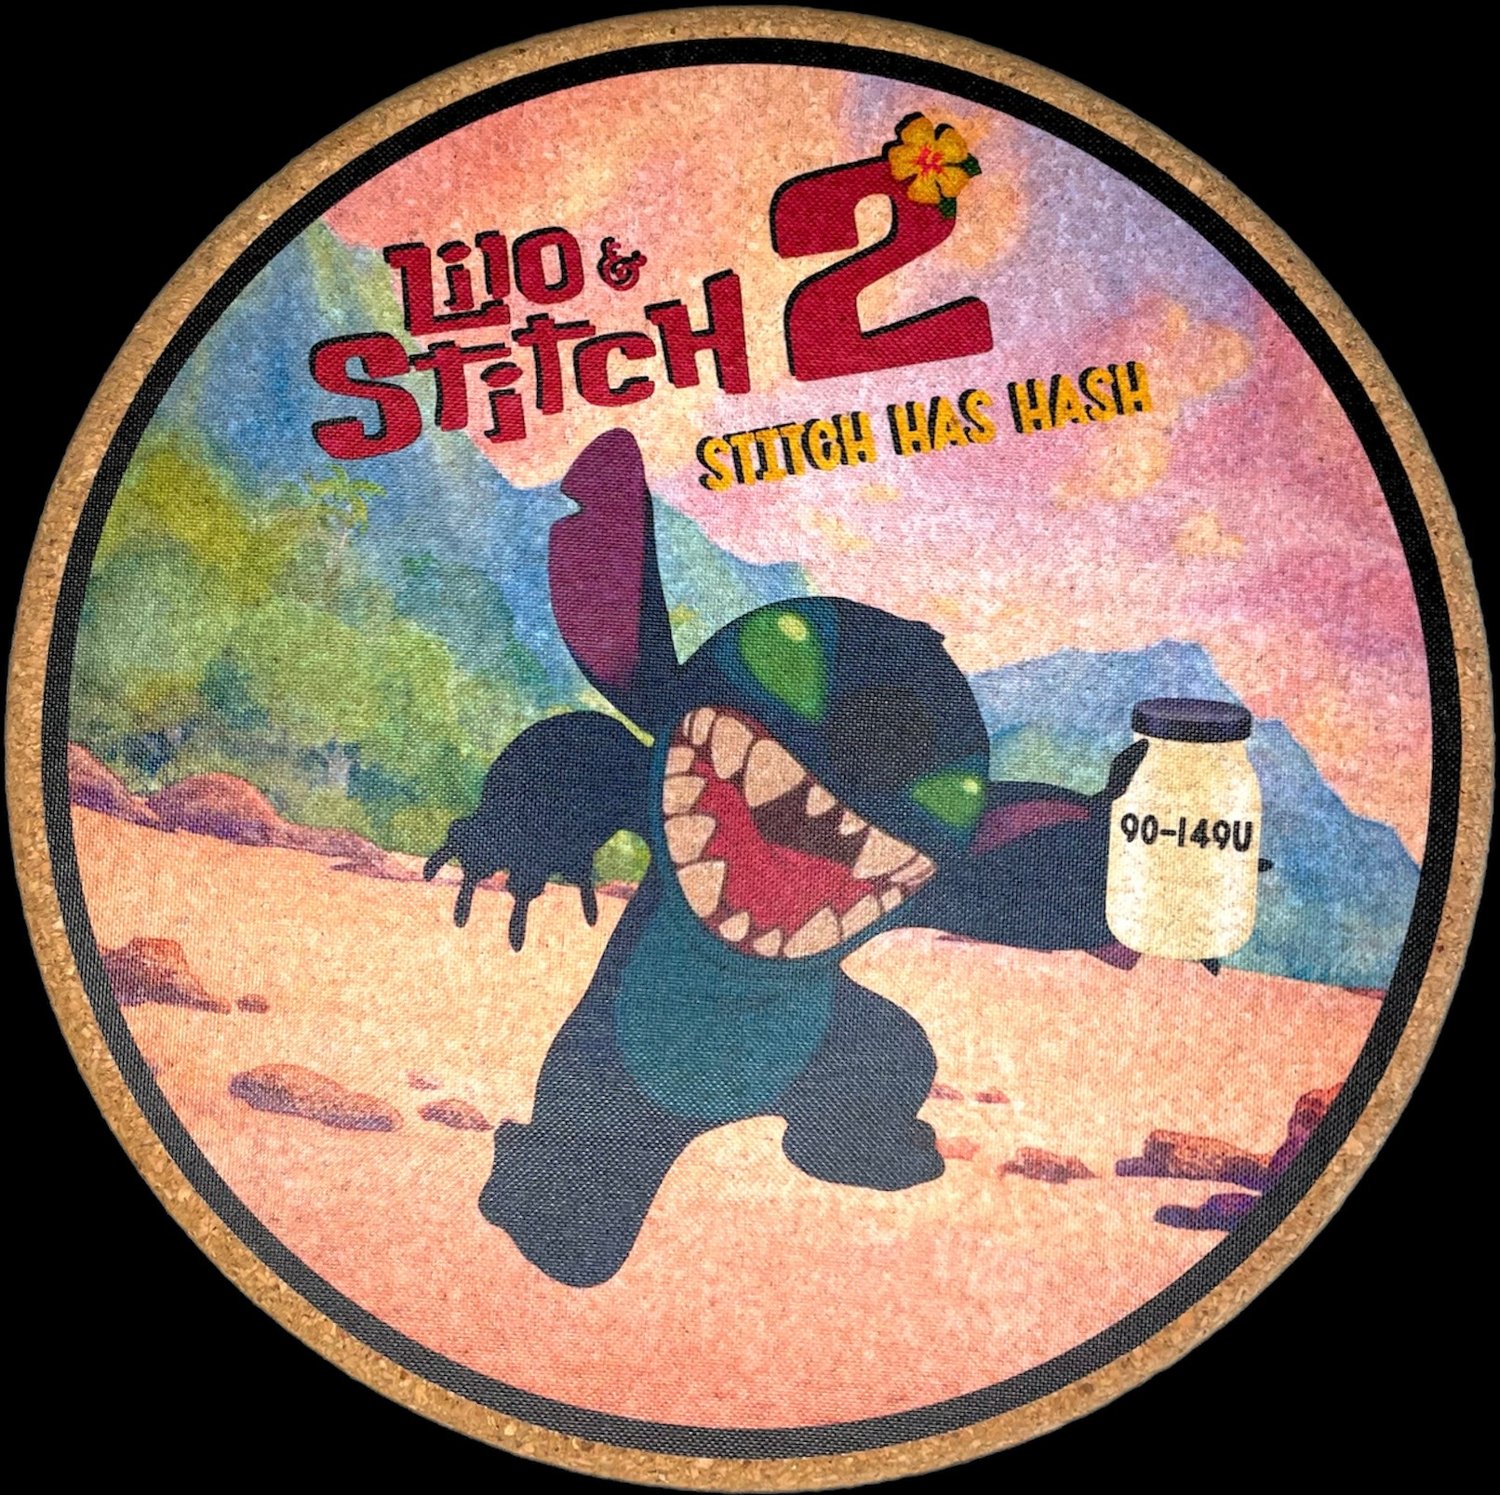 Stitch has Hash